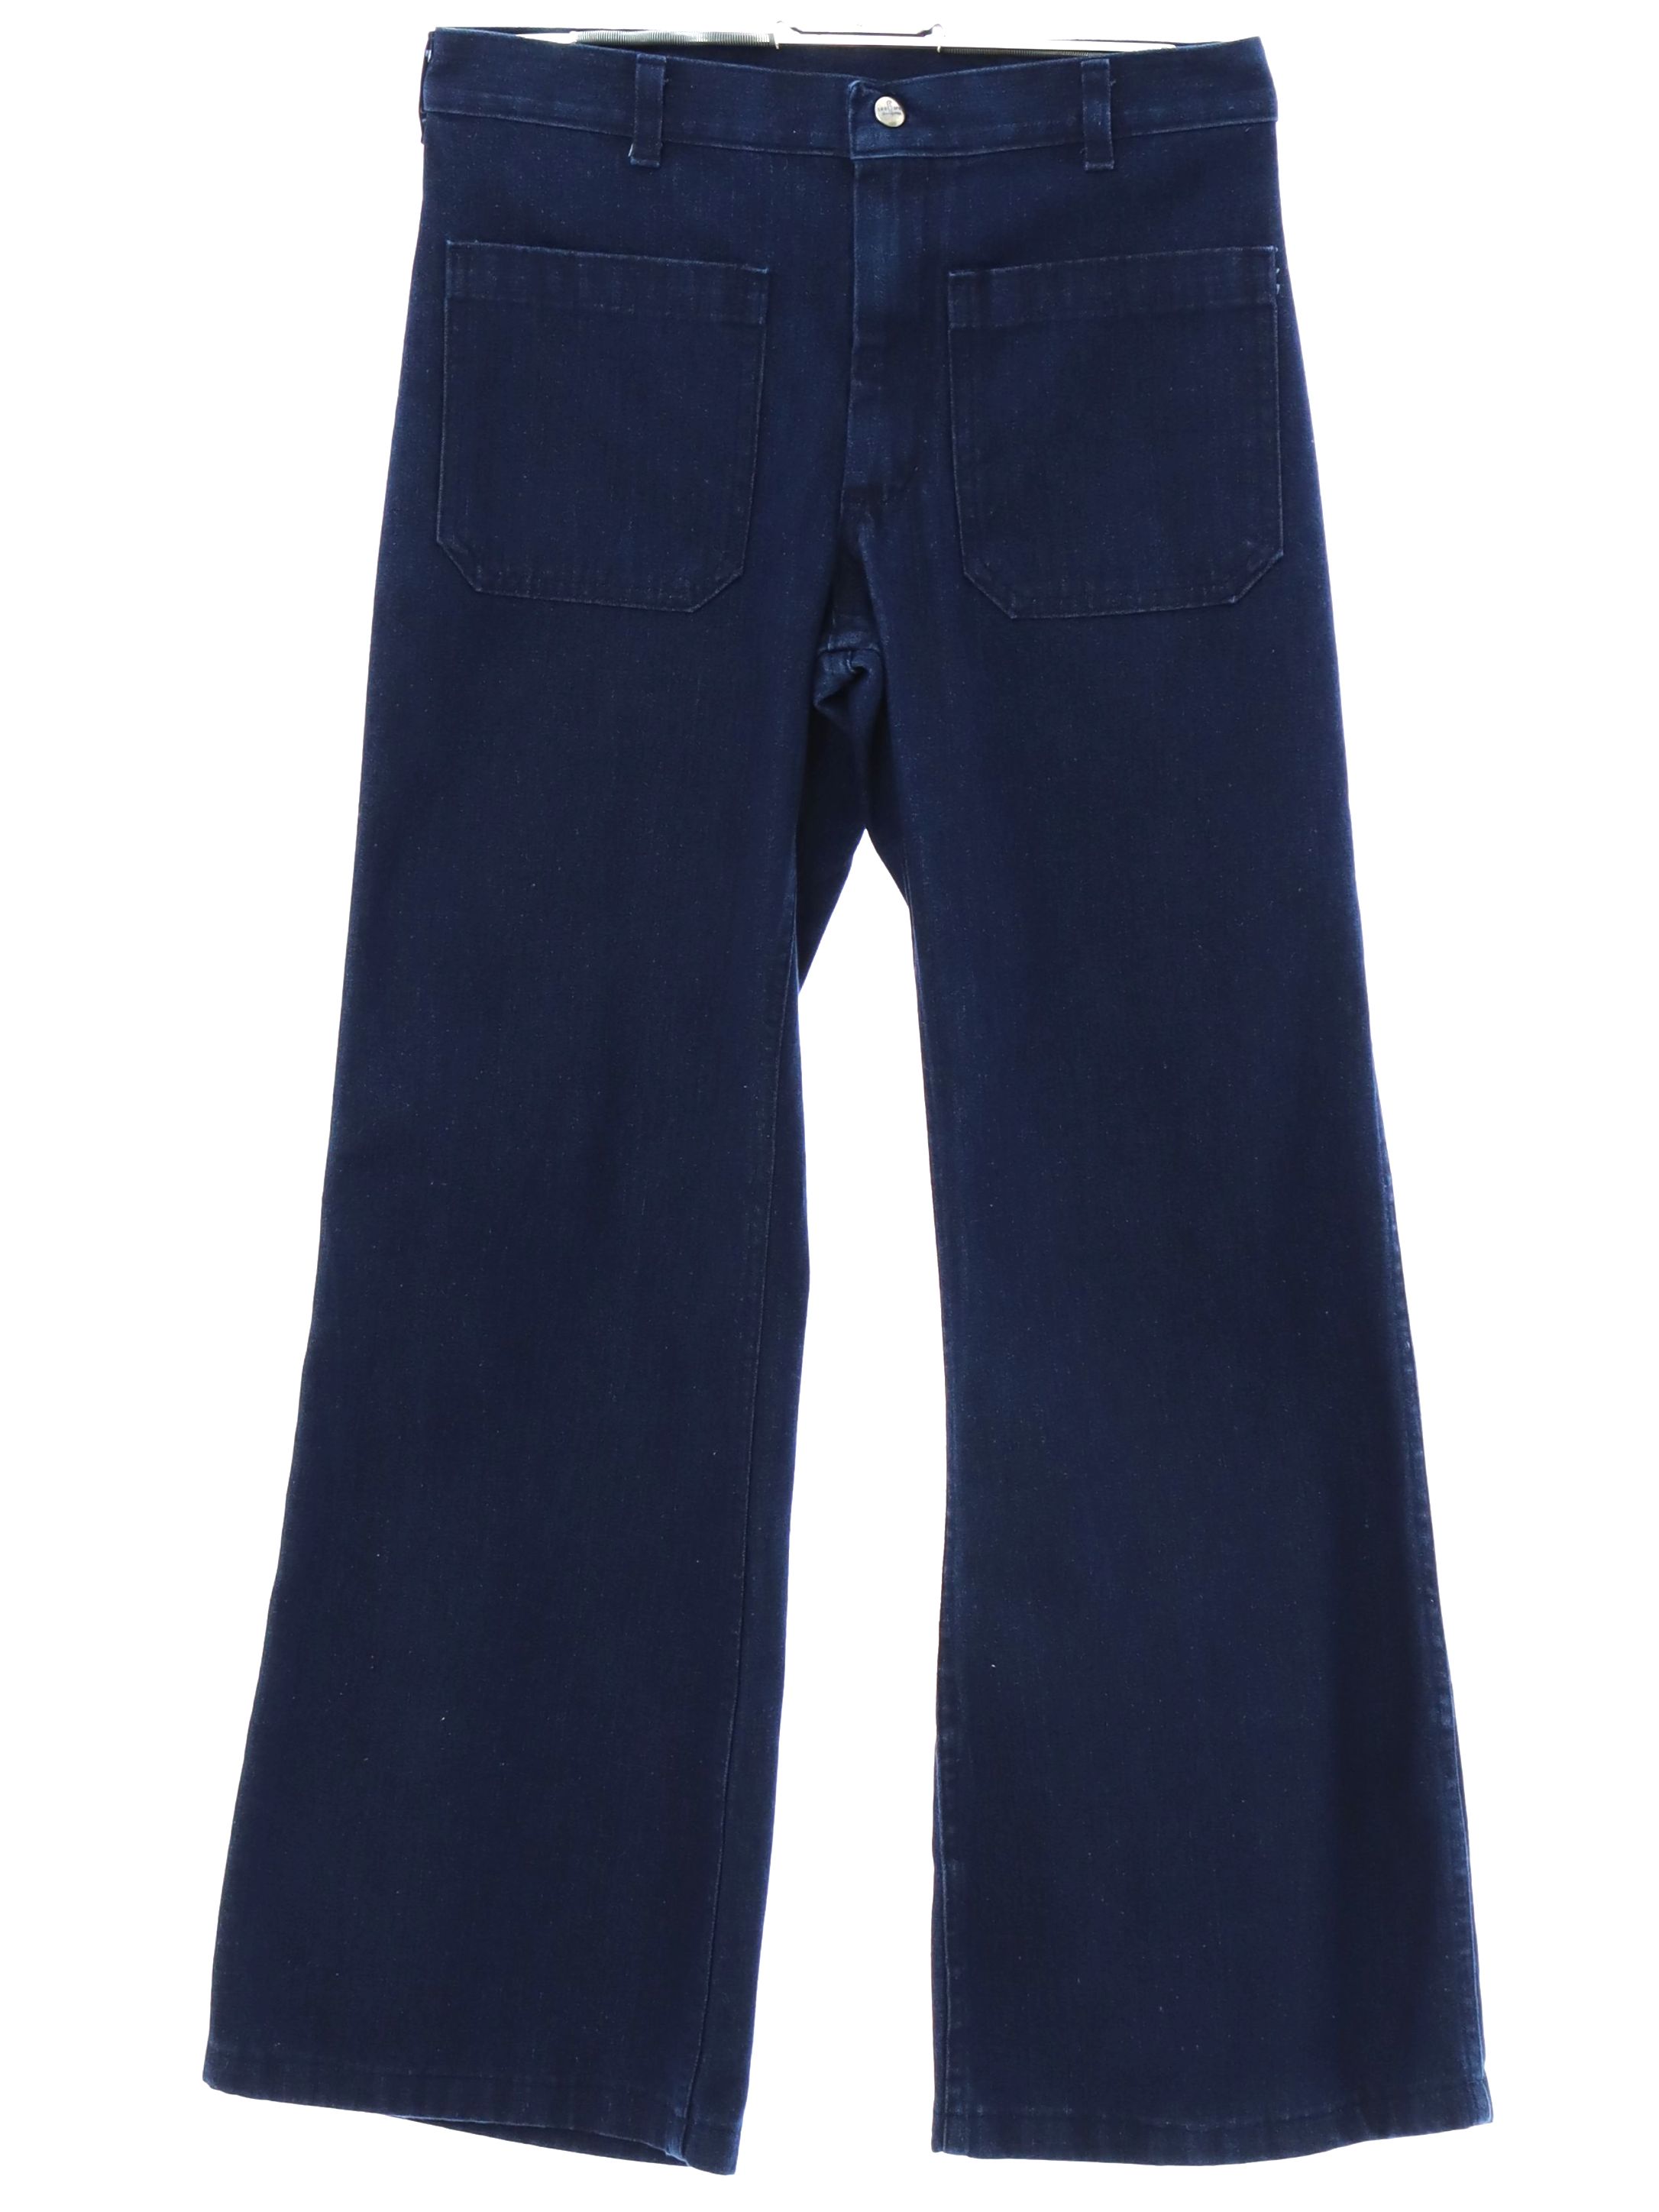 Vintage Seafarer 70's Bellbottom Pants: 70s style -Seafarer- Unisex ...